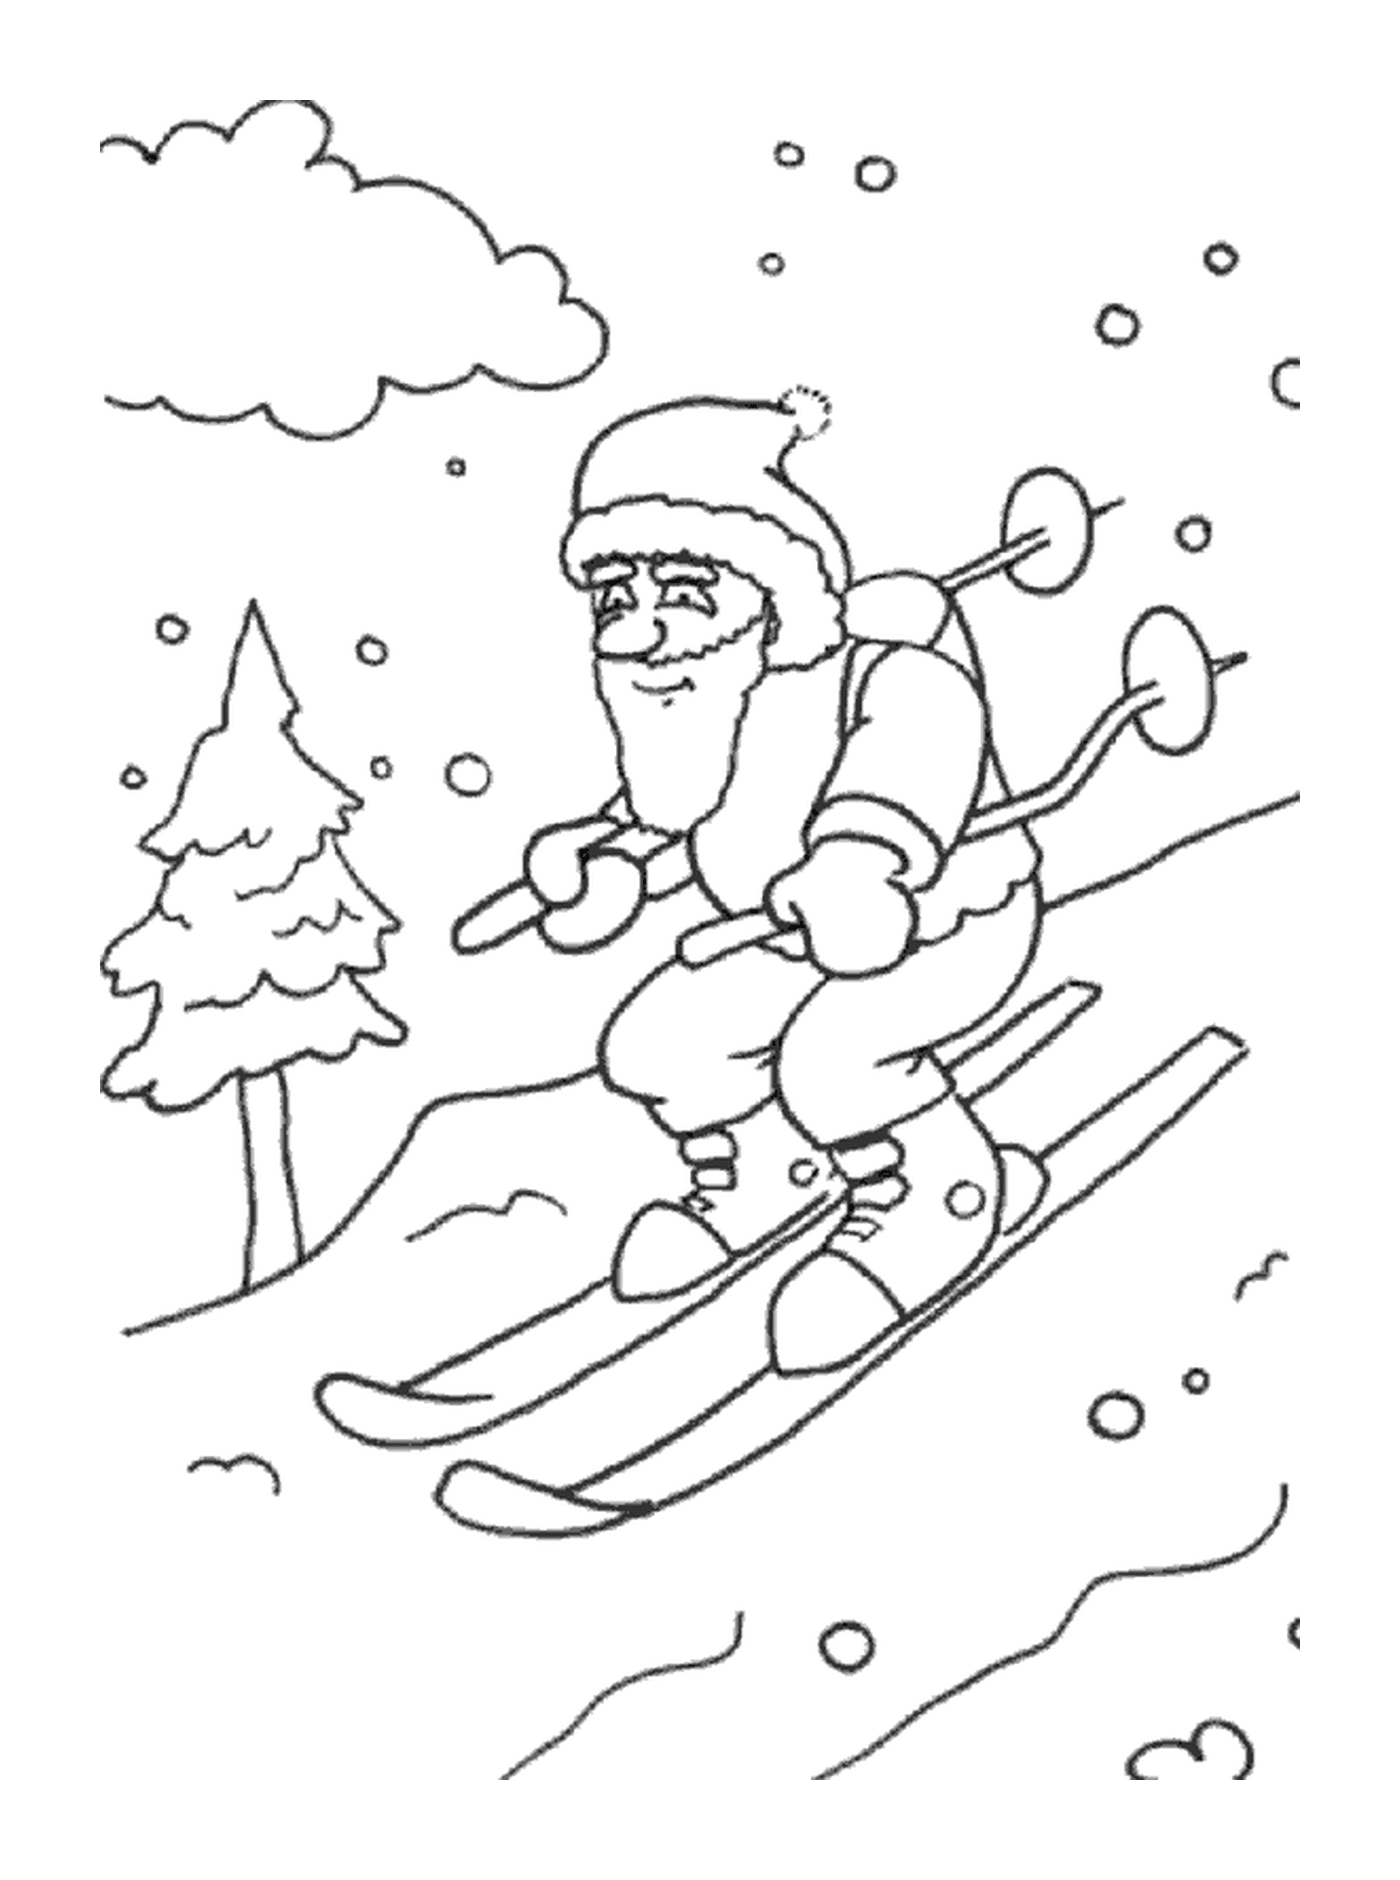  Санта-Клаус катается на лыжах 